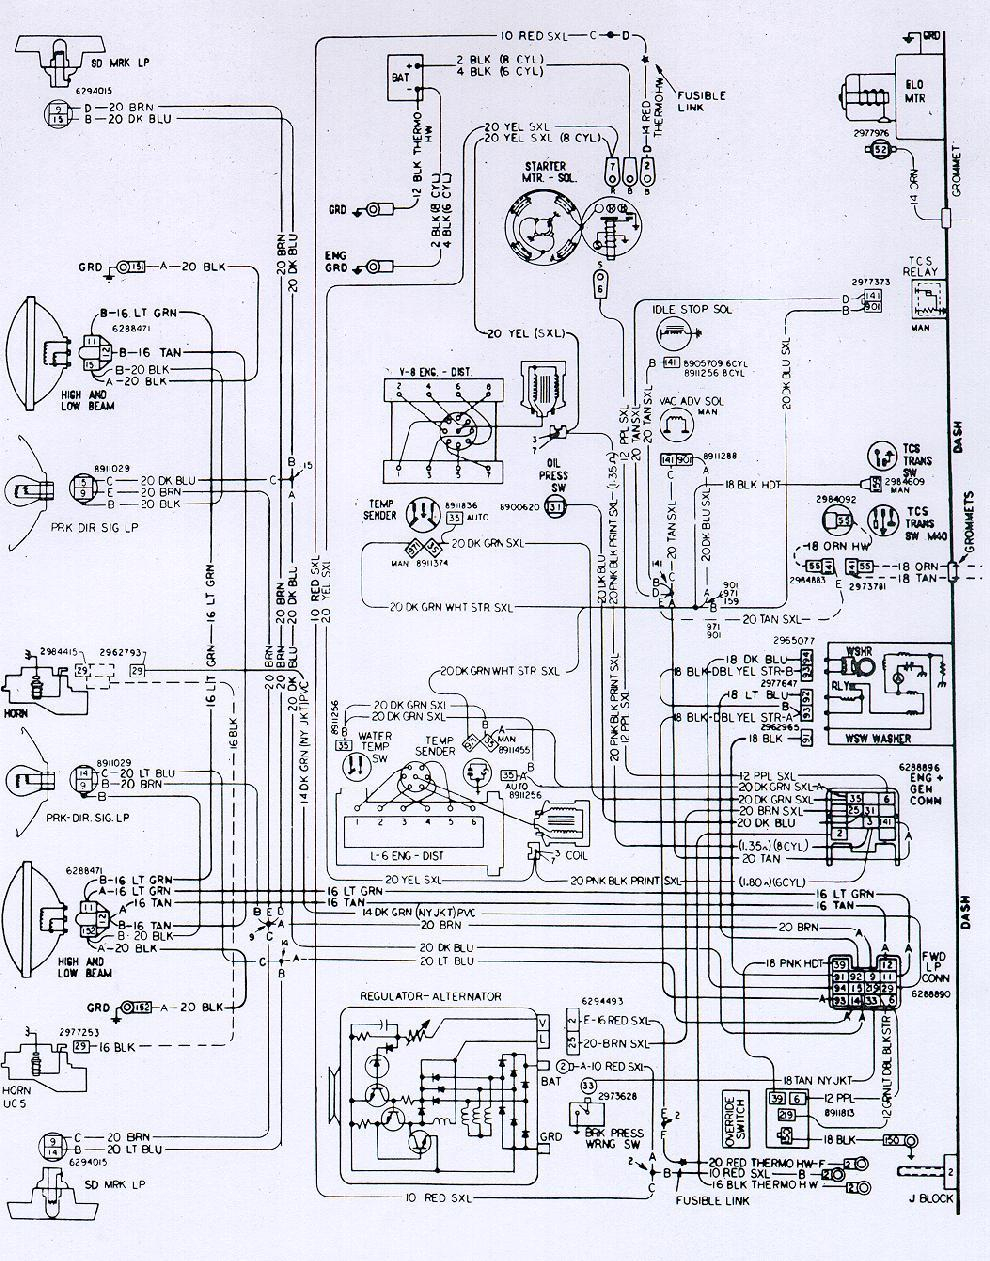 [DIAGRAM] 1967 Camaro Distributor Wiring Diagram FULL Version HD